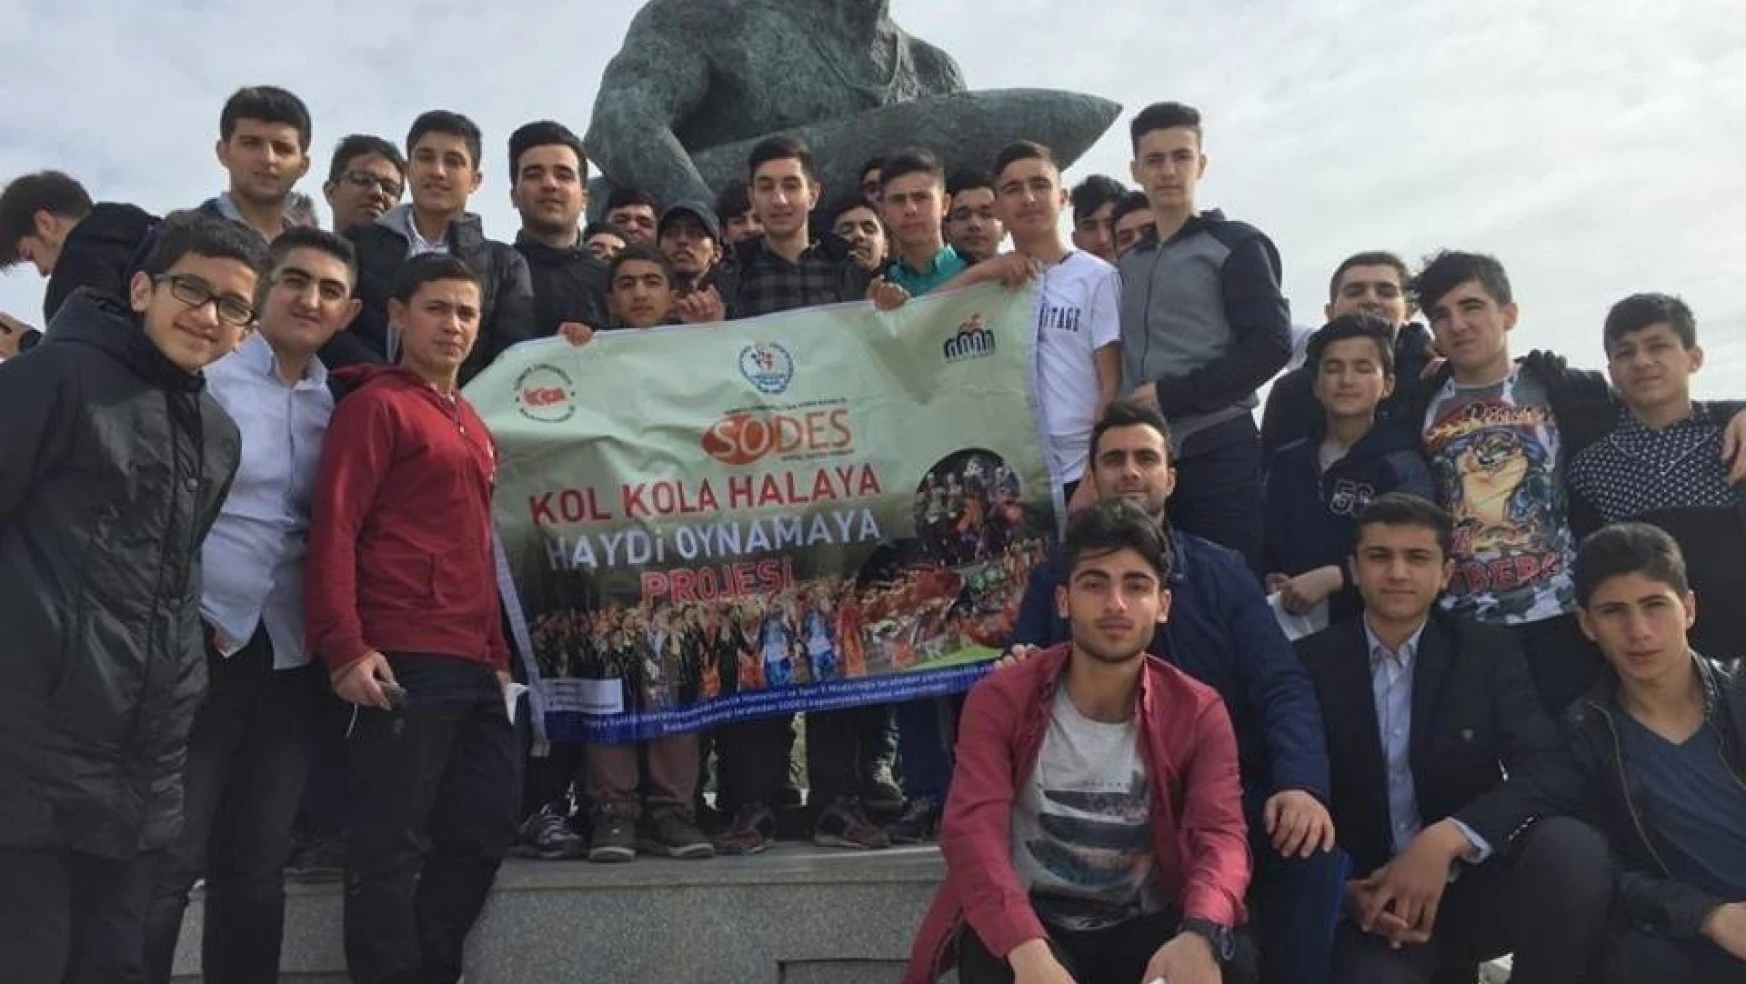 Malatya'da 'Kol Kola Halaya Haydi Oynamaya' Projesi
